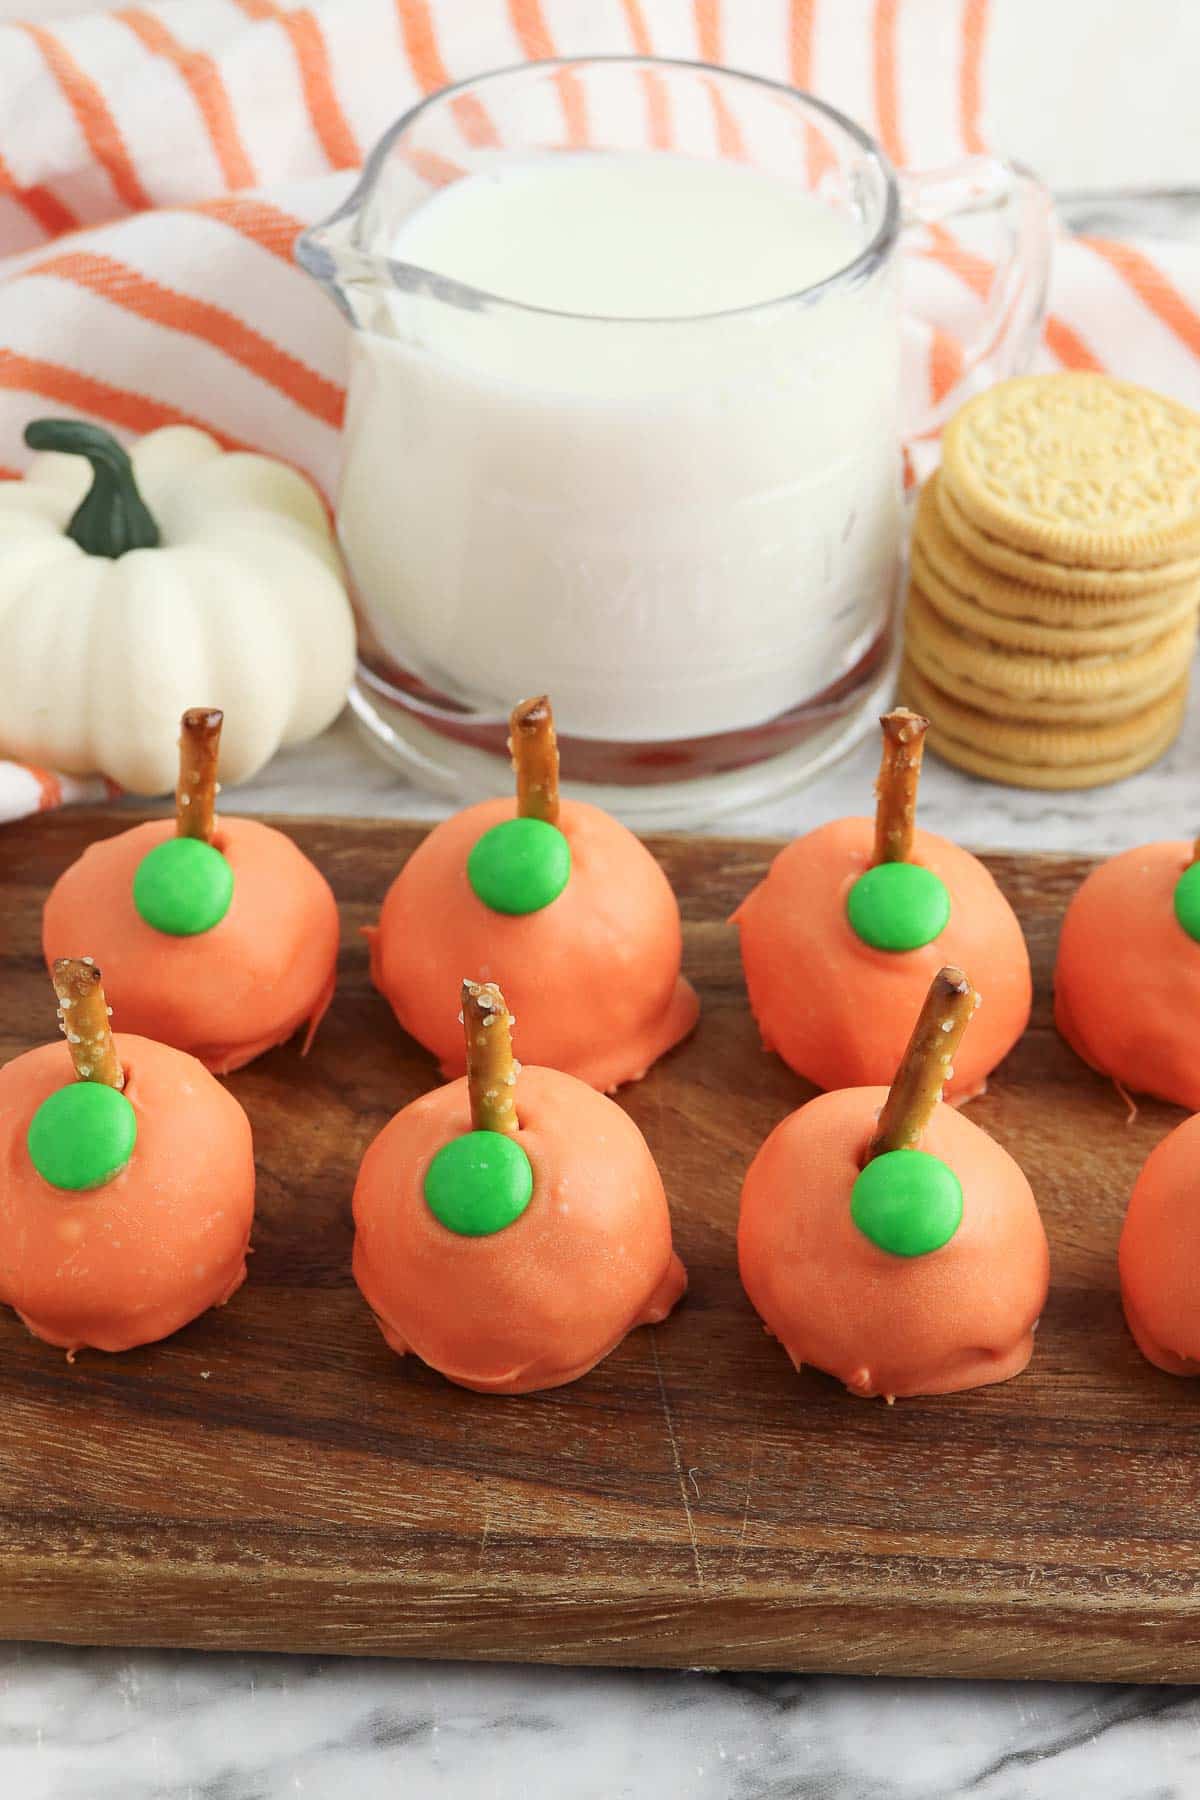 eight no-bake Pumpkin oreo balls on a wooden cutting board.